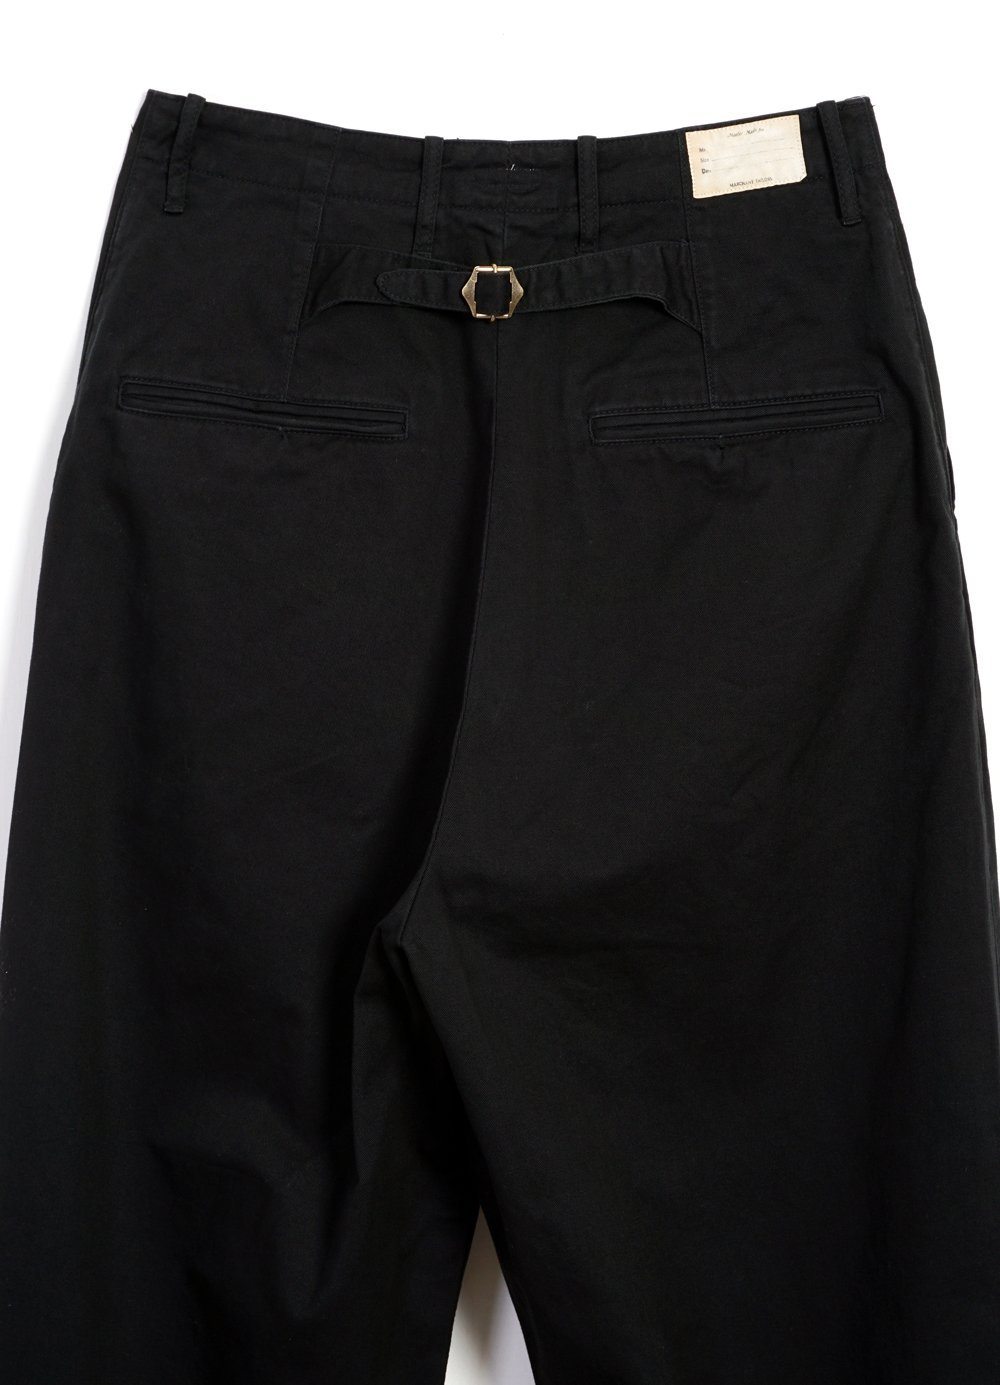 Garments WAISTED CHINO HANSEN I NIME HIGH | I PANTS BLACK